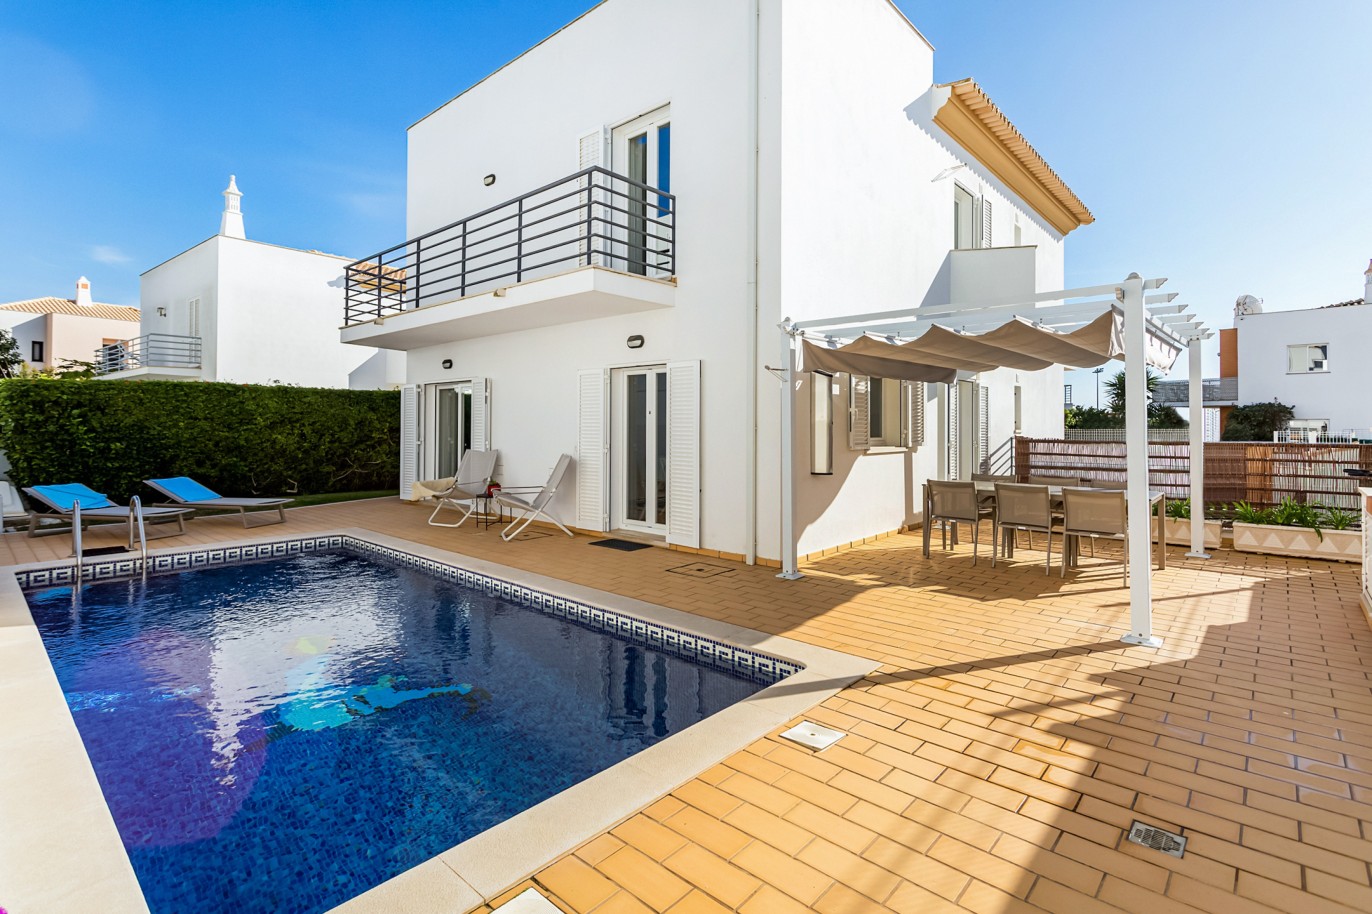 4 bedroom detached villa with pool for sale in Albufeira, Algarve_214371